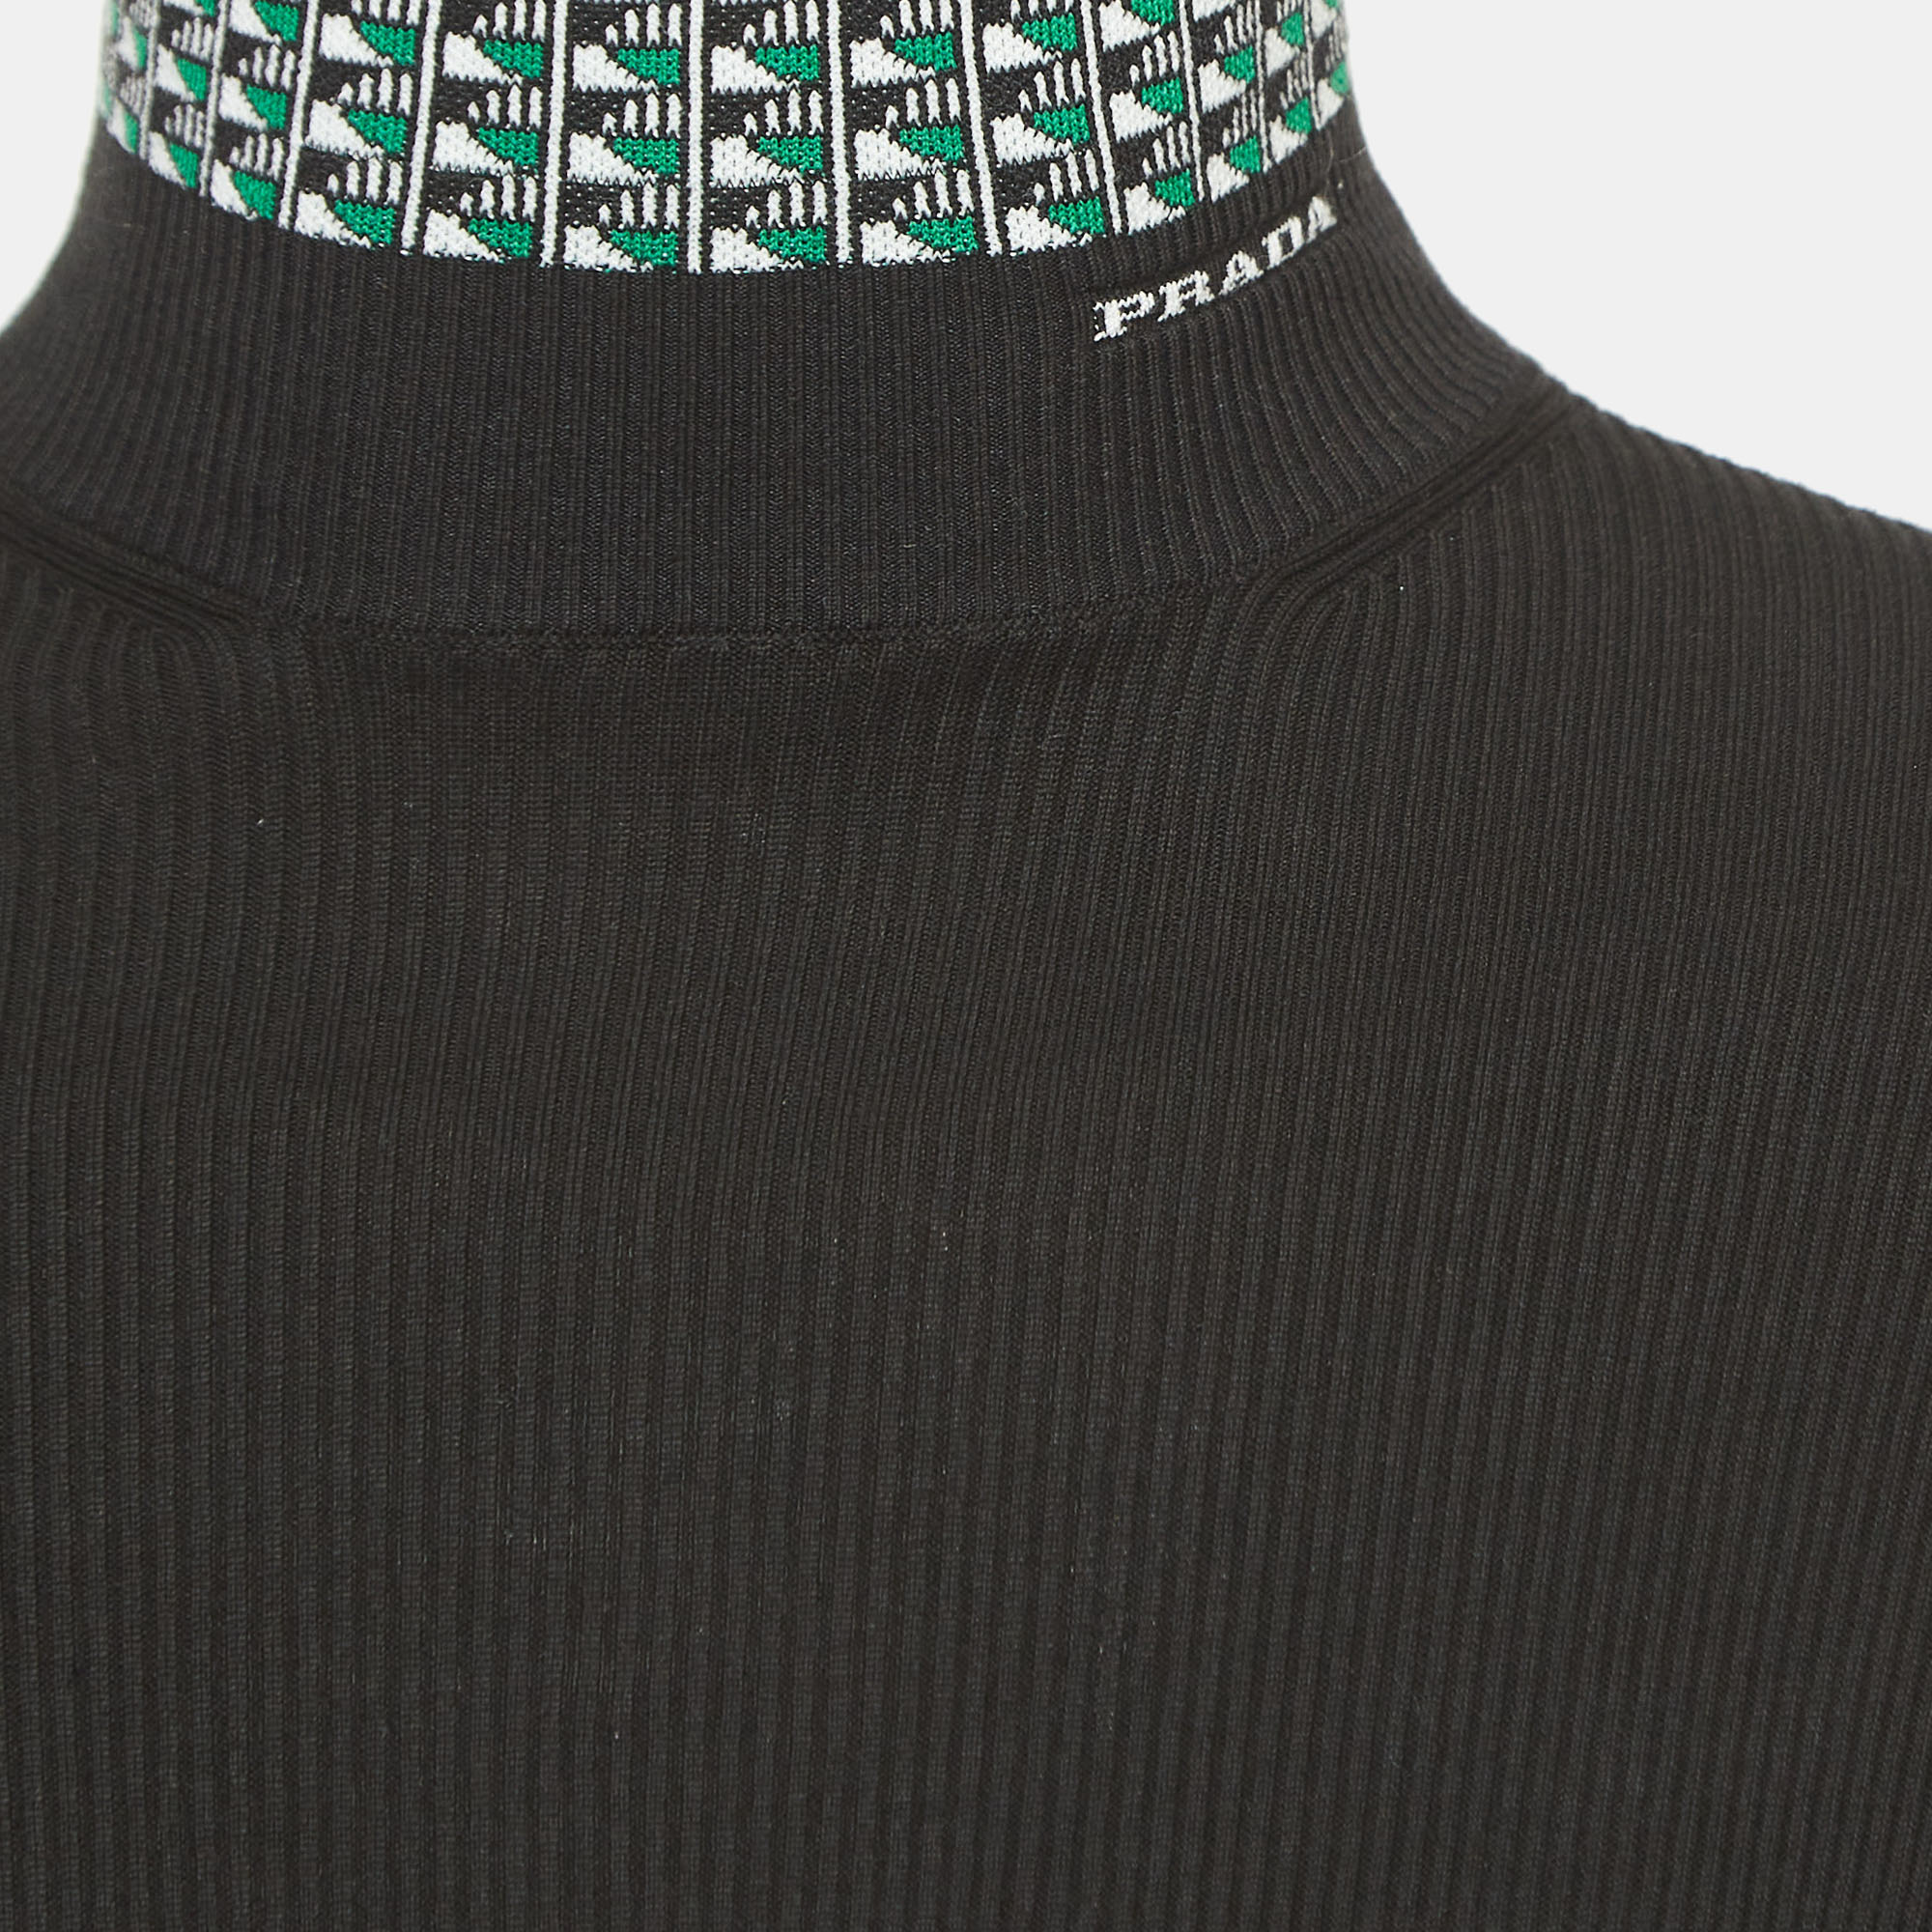 Prada Black Cotton Knit Jacquard Turtleneck Sweater L